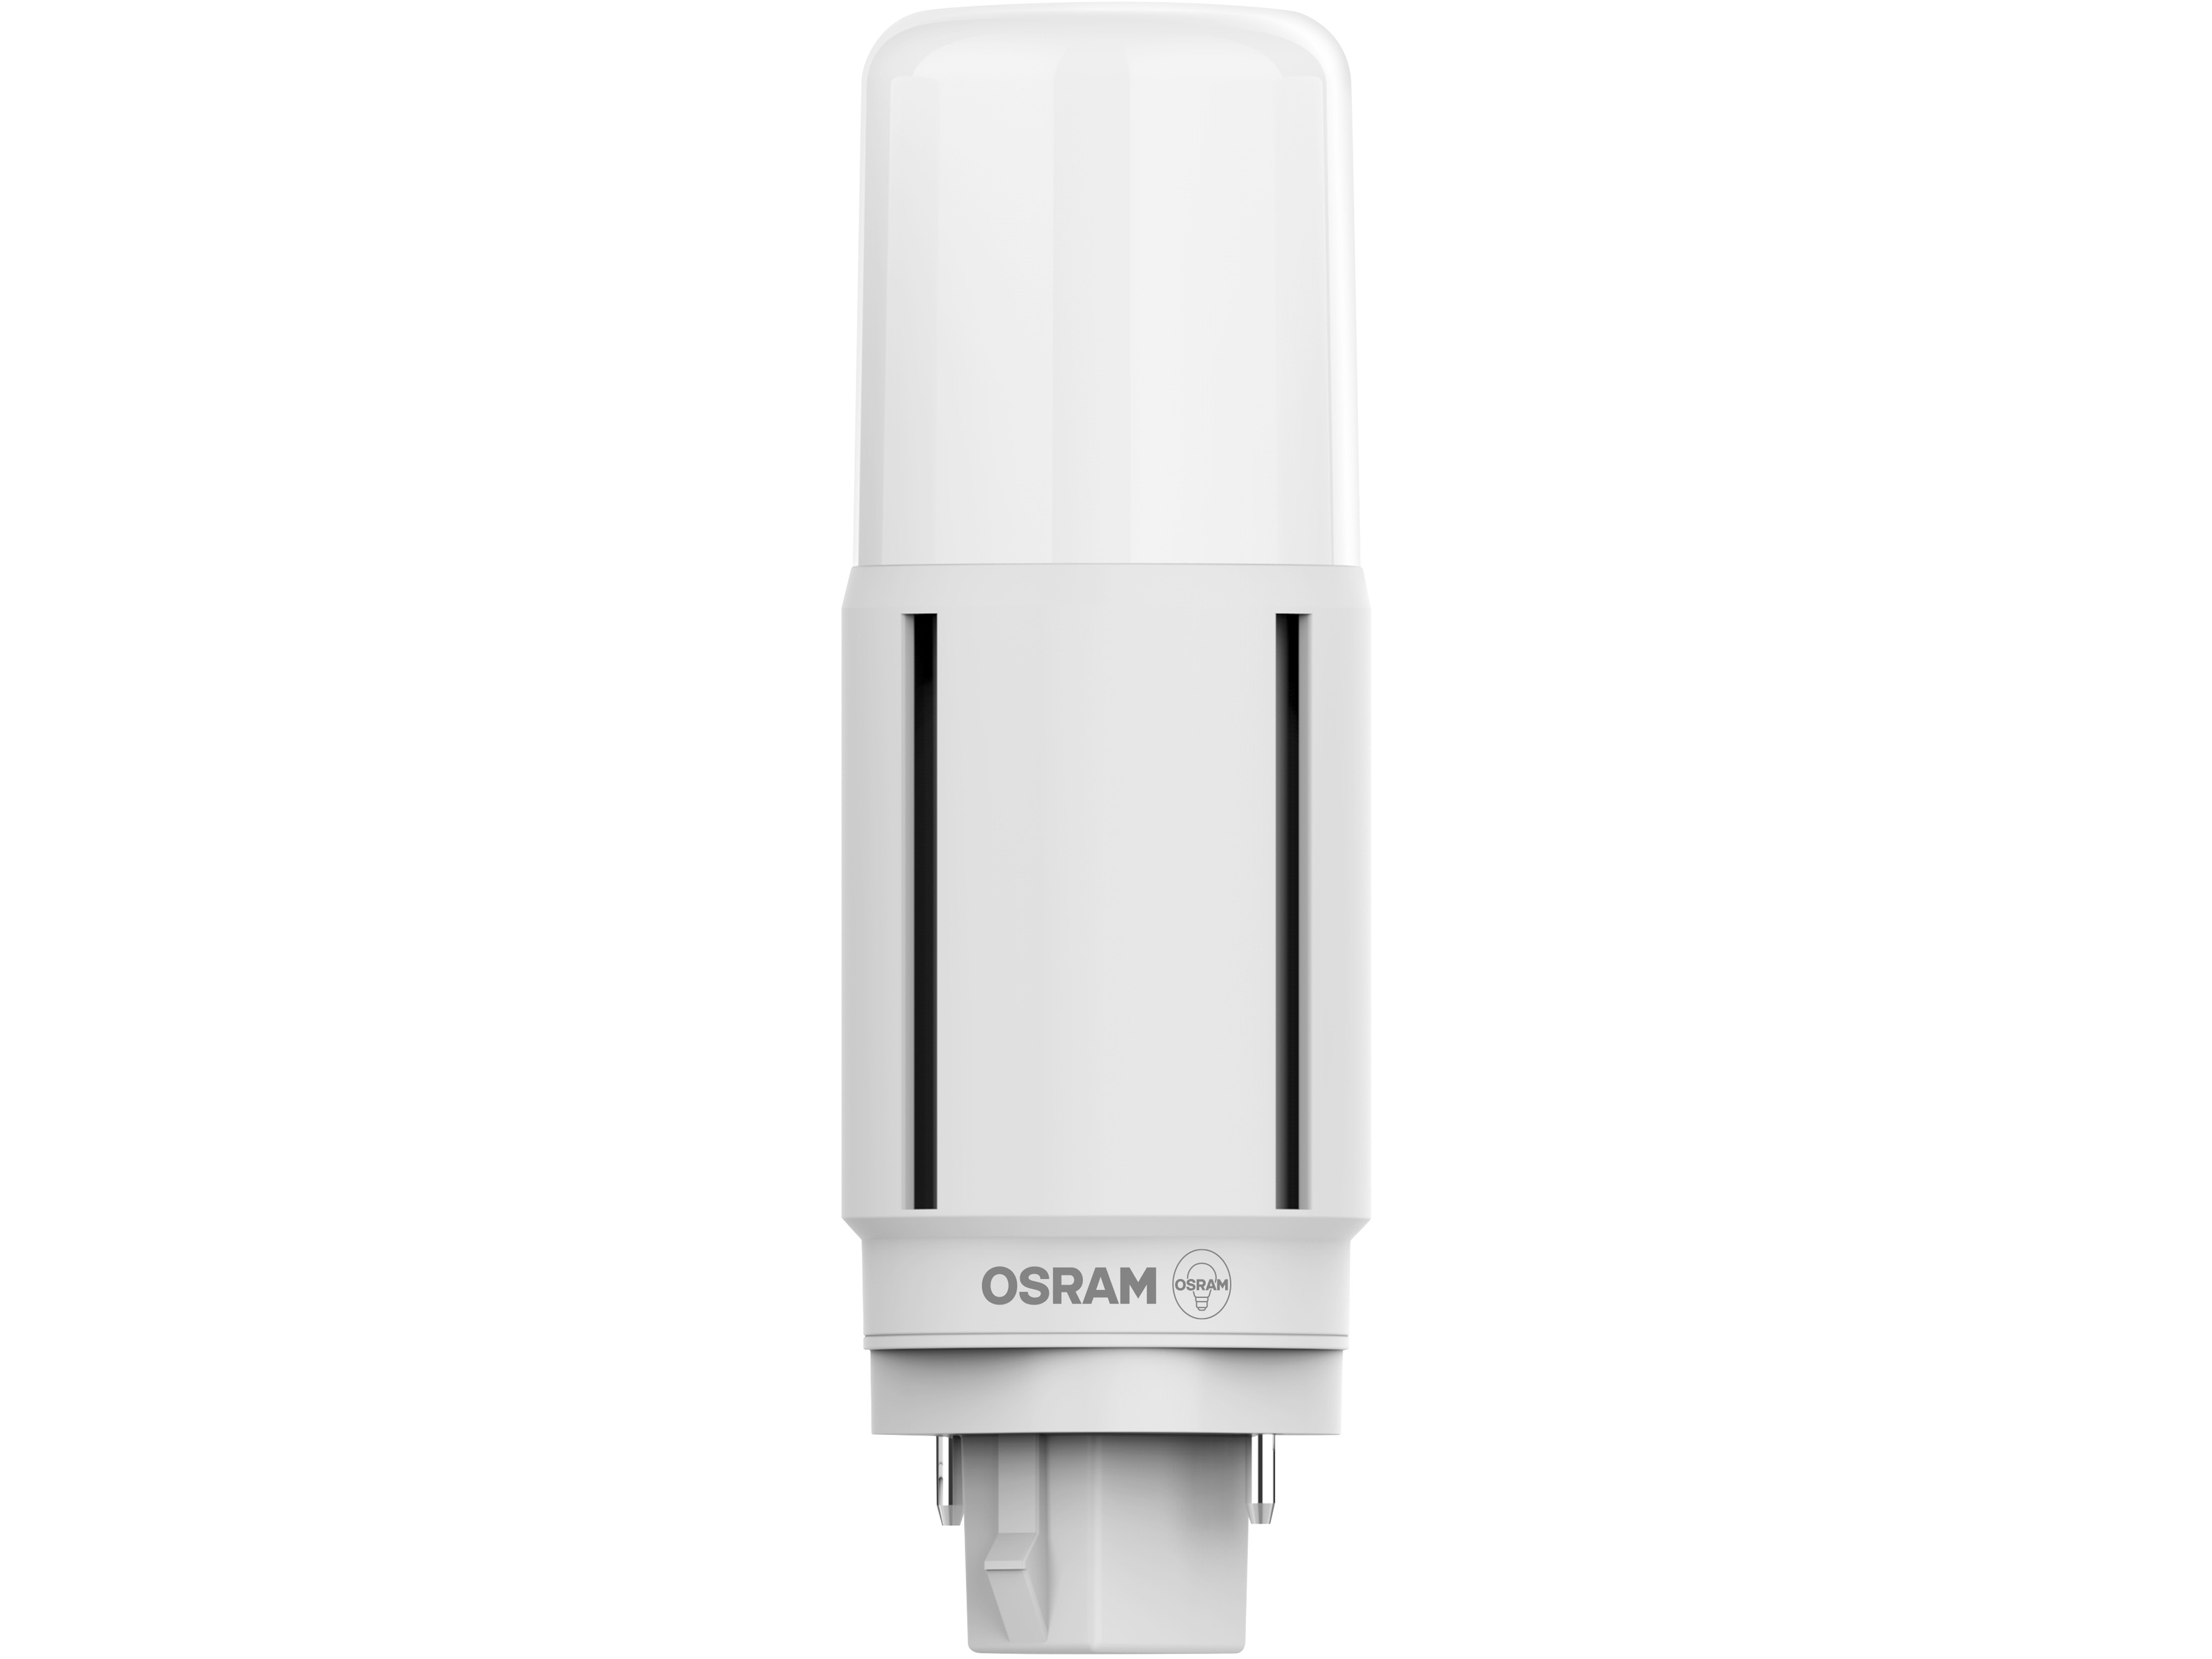 OSRAM LED-Lampe, Dulux D18, G24d, EEK: E, 7,5W, 950lm, 4000K